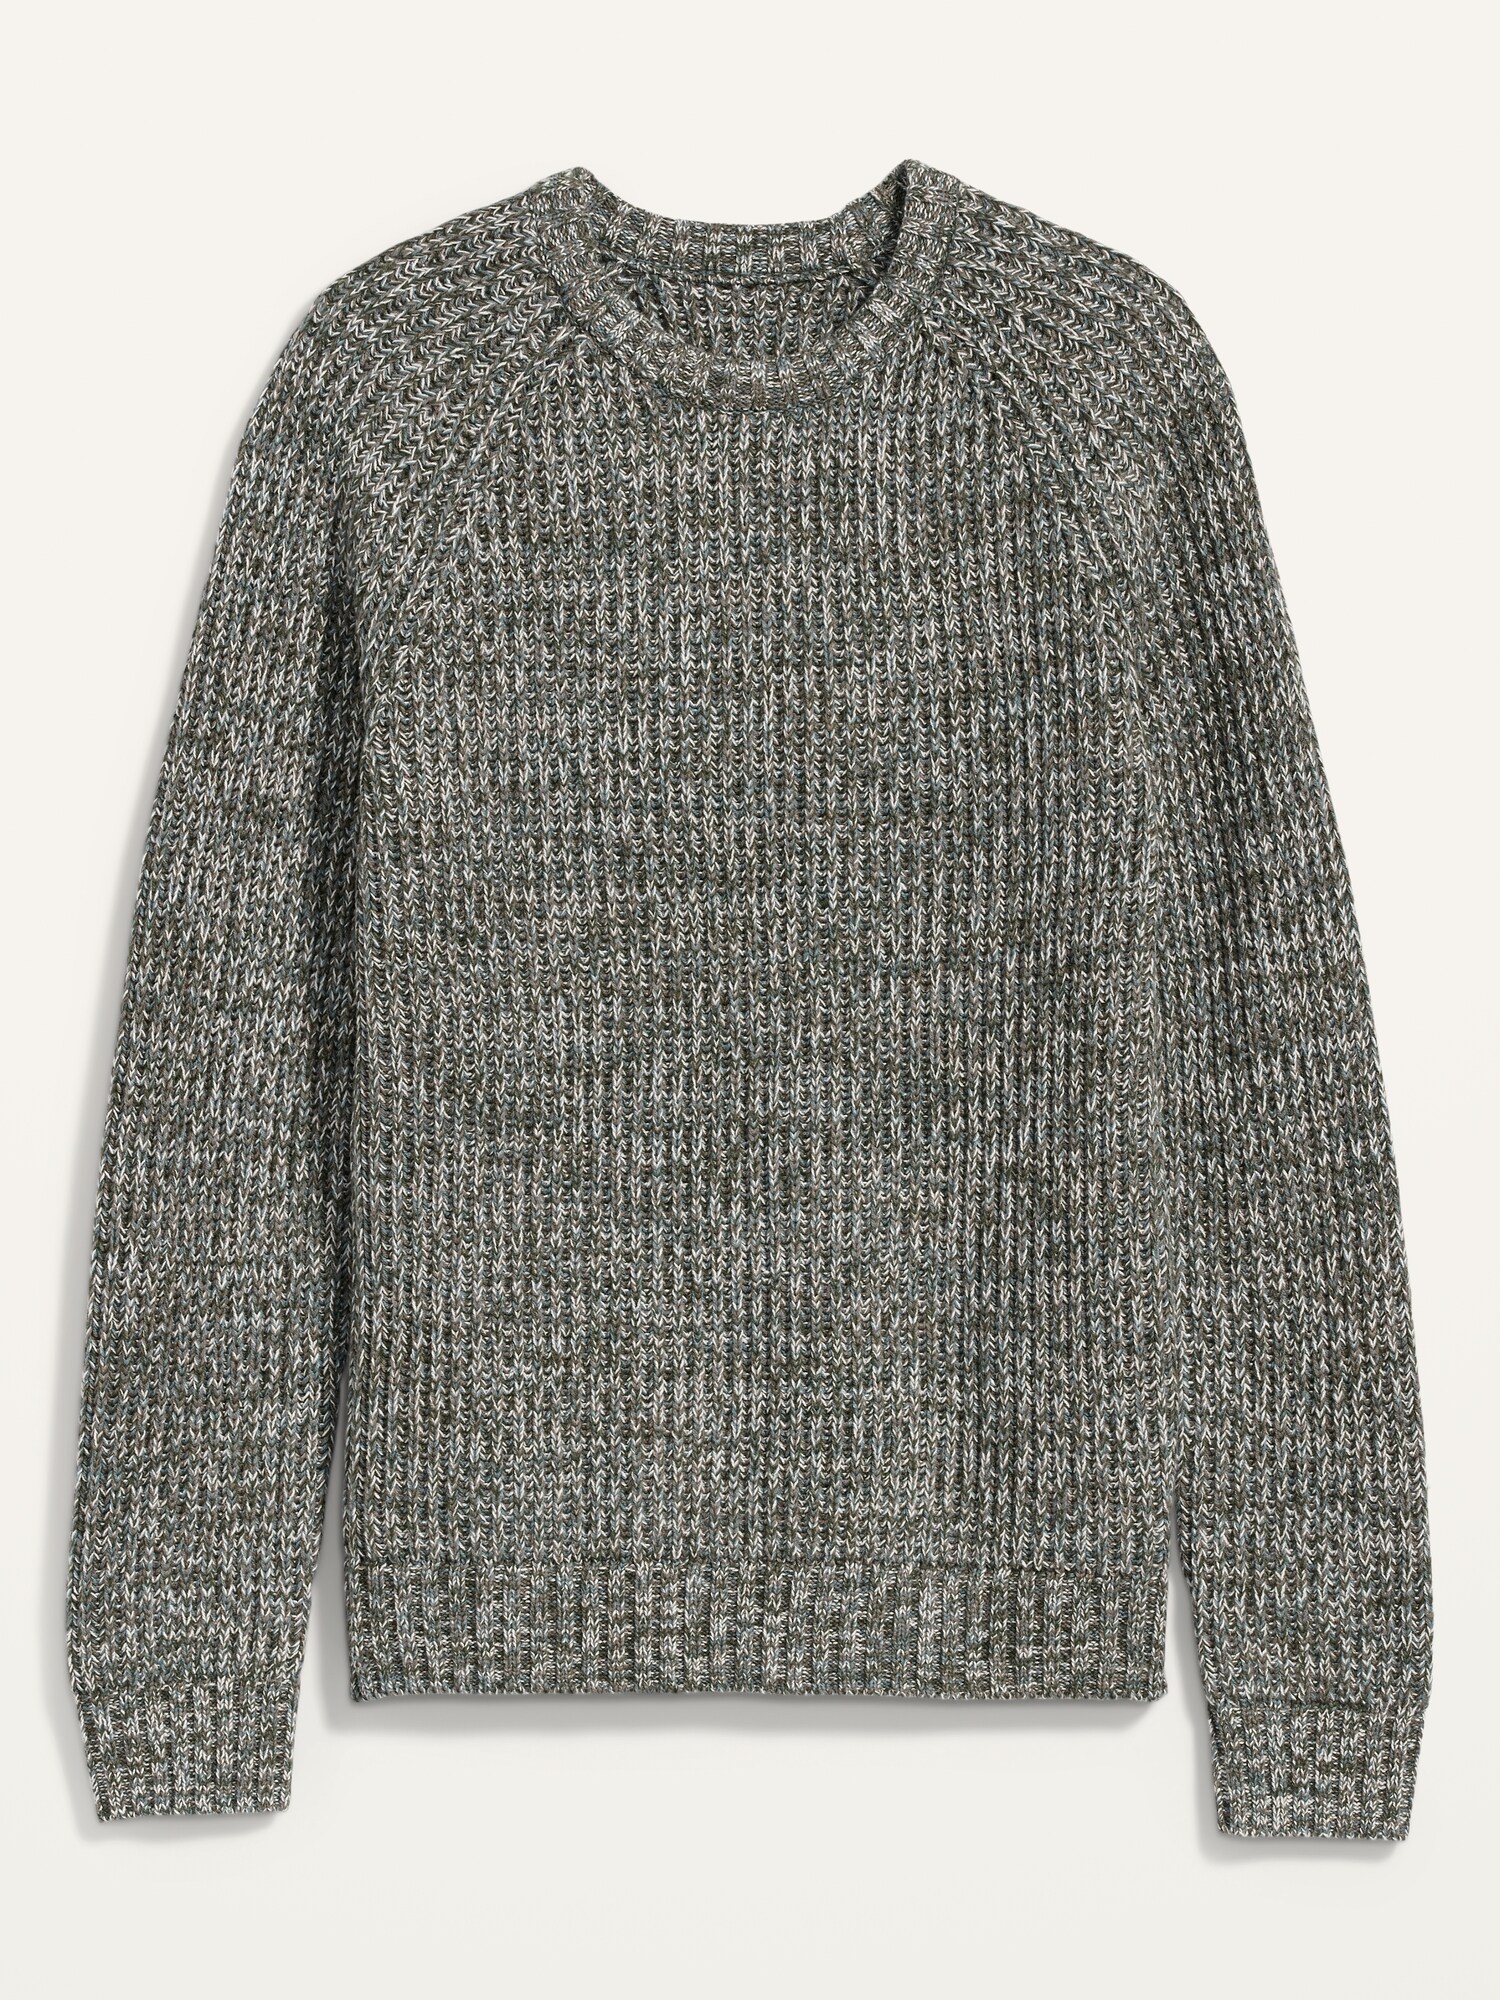 Textured-Rib Fisherman Sweater